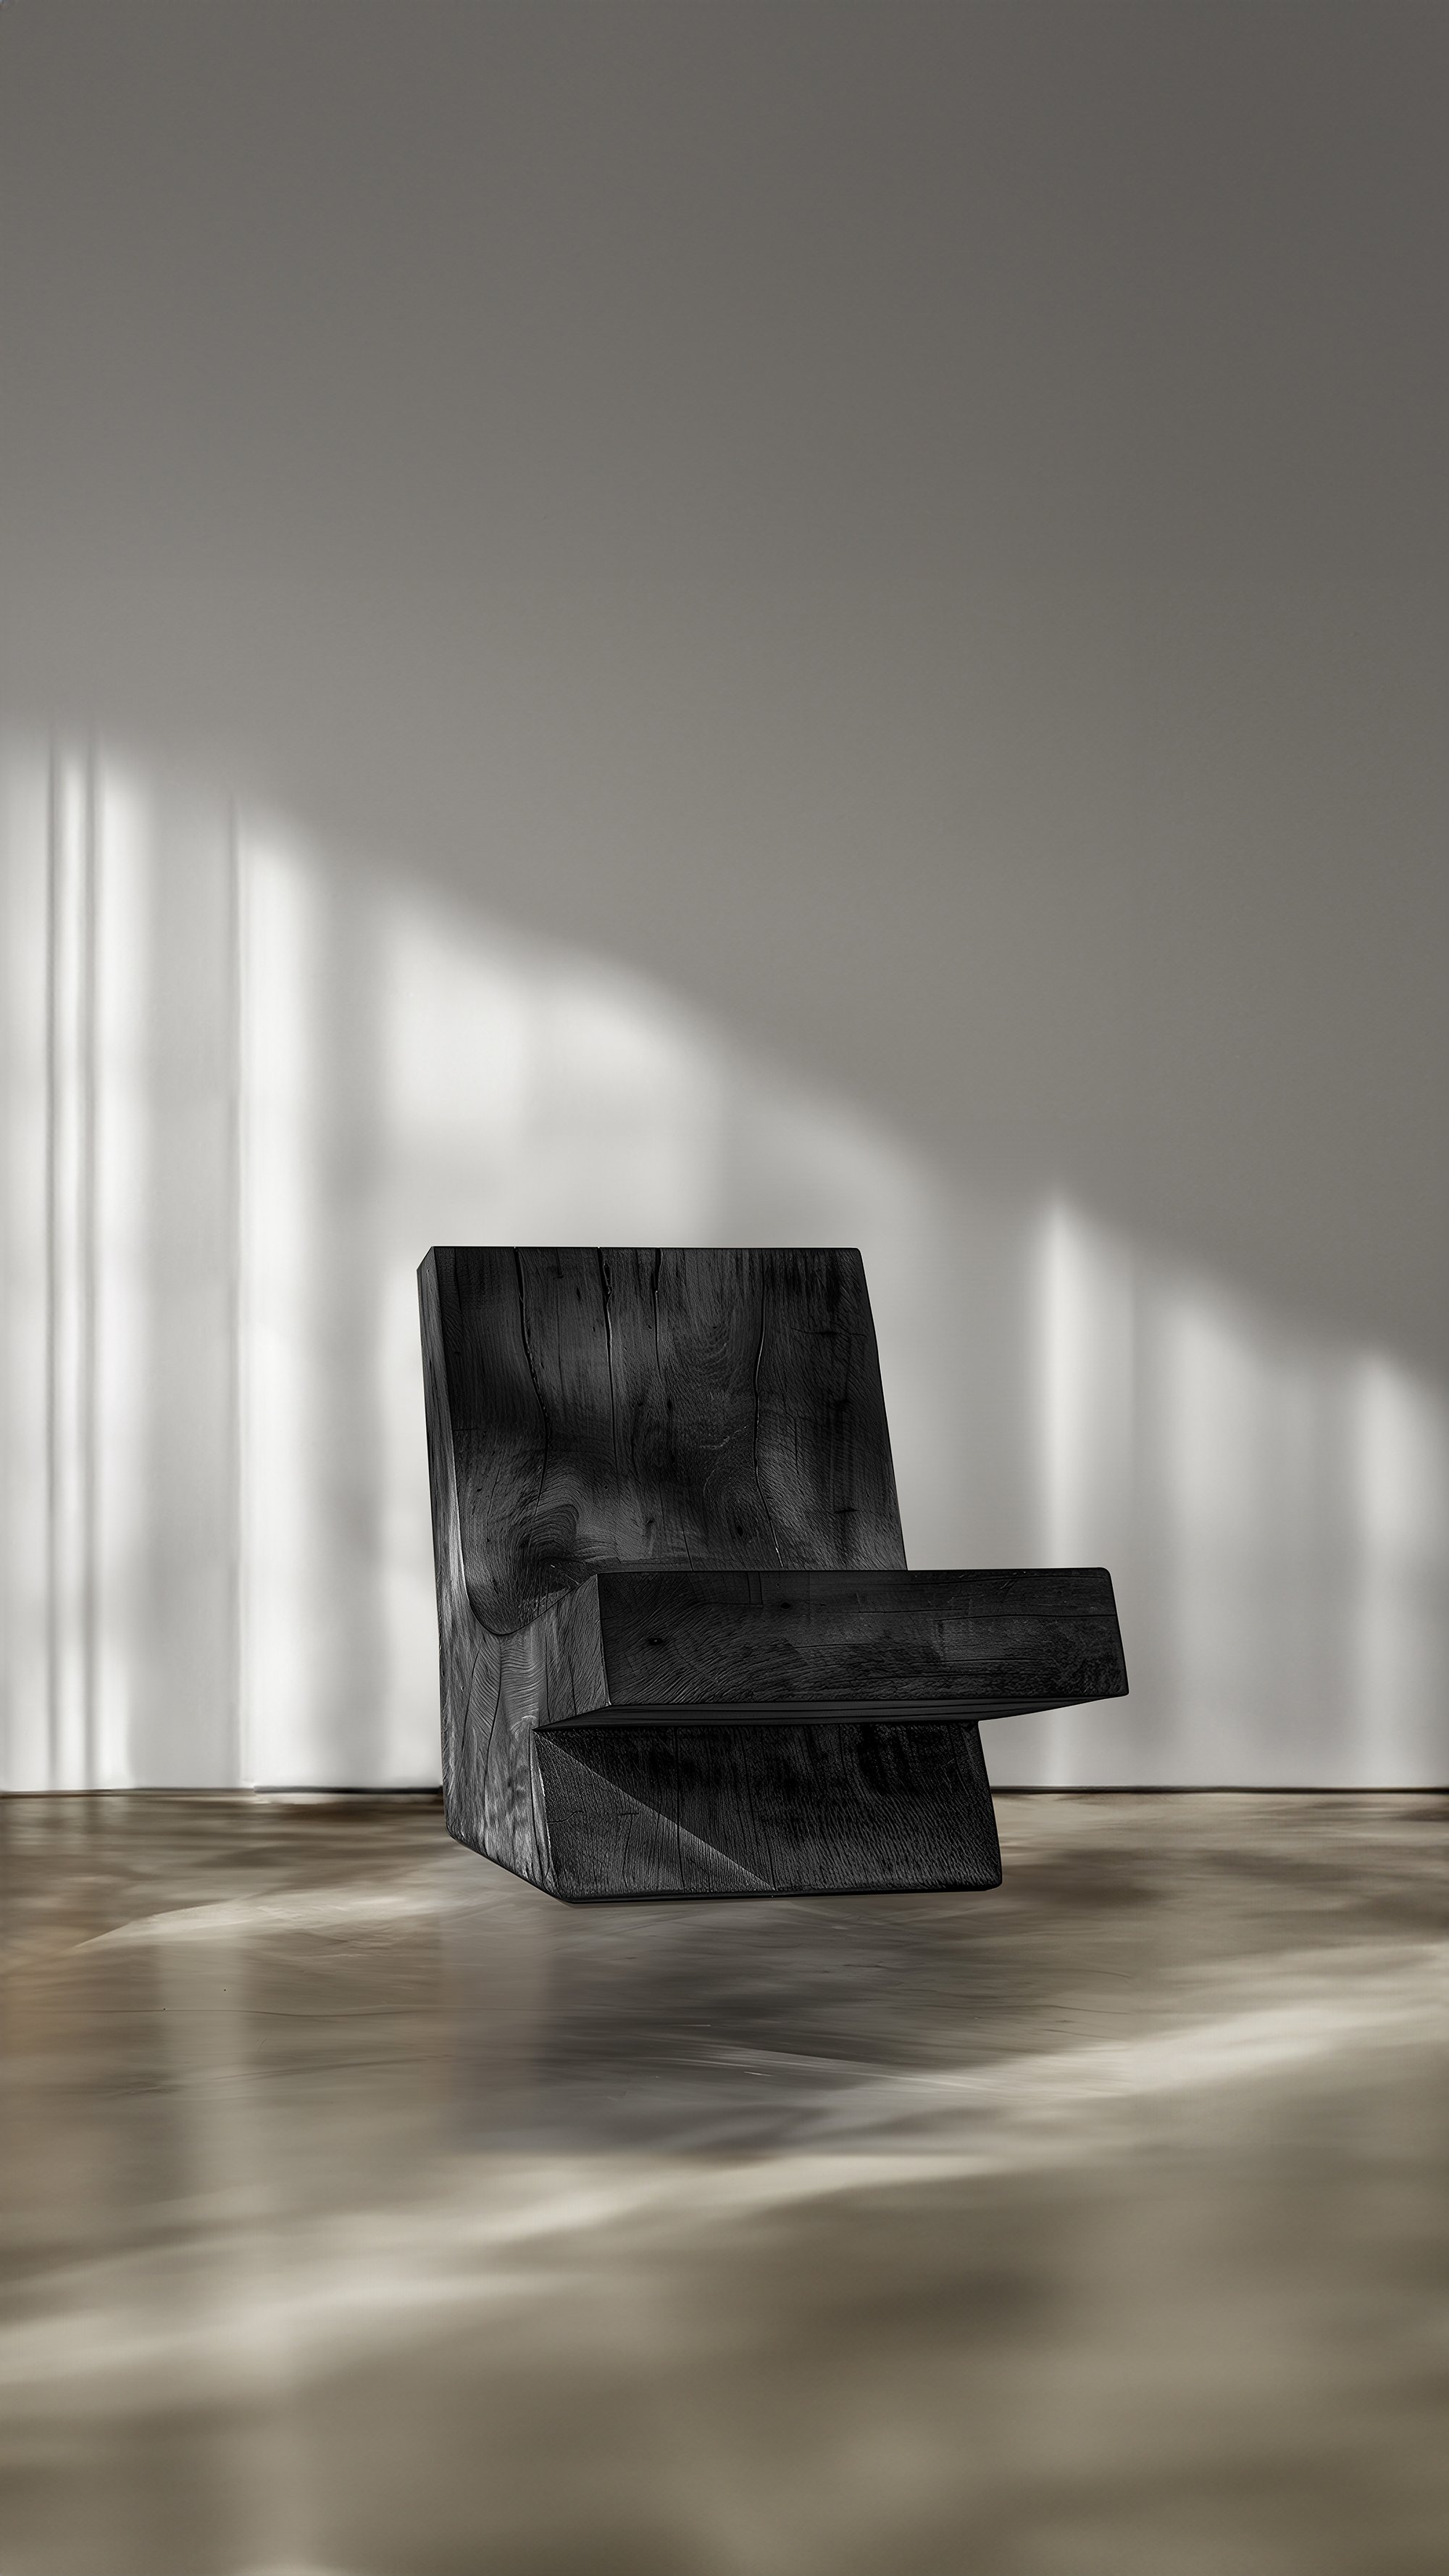 Contemporary Lobby Chair Sleek Design Muted by Joel Escalona No03 -13.jpg